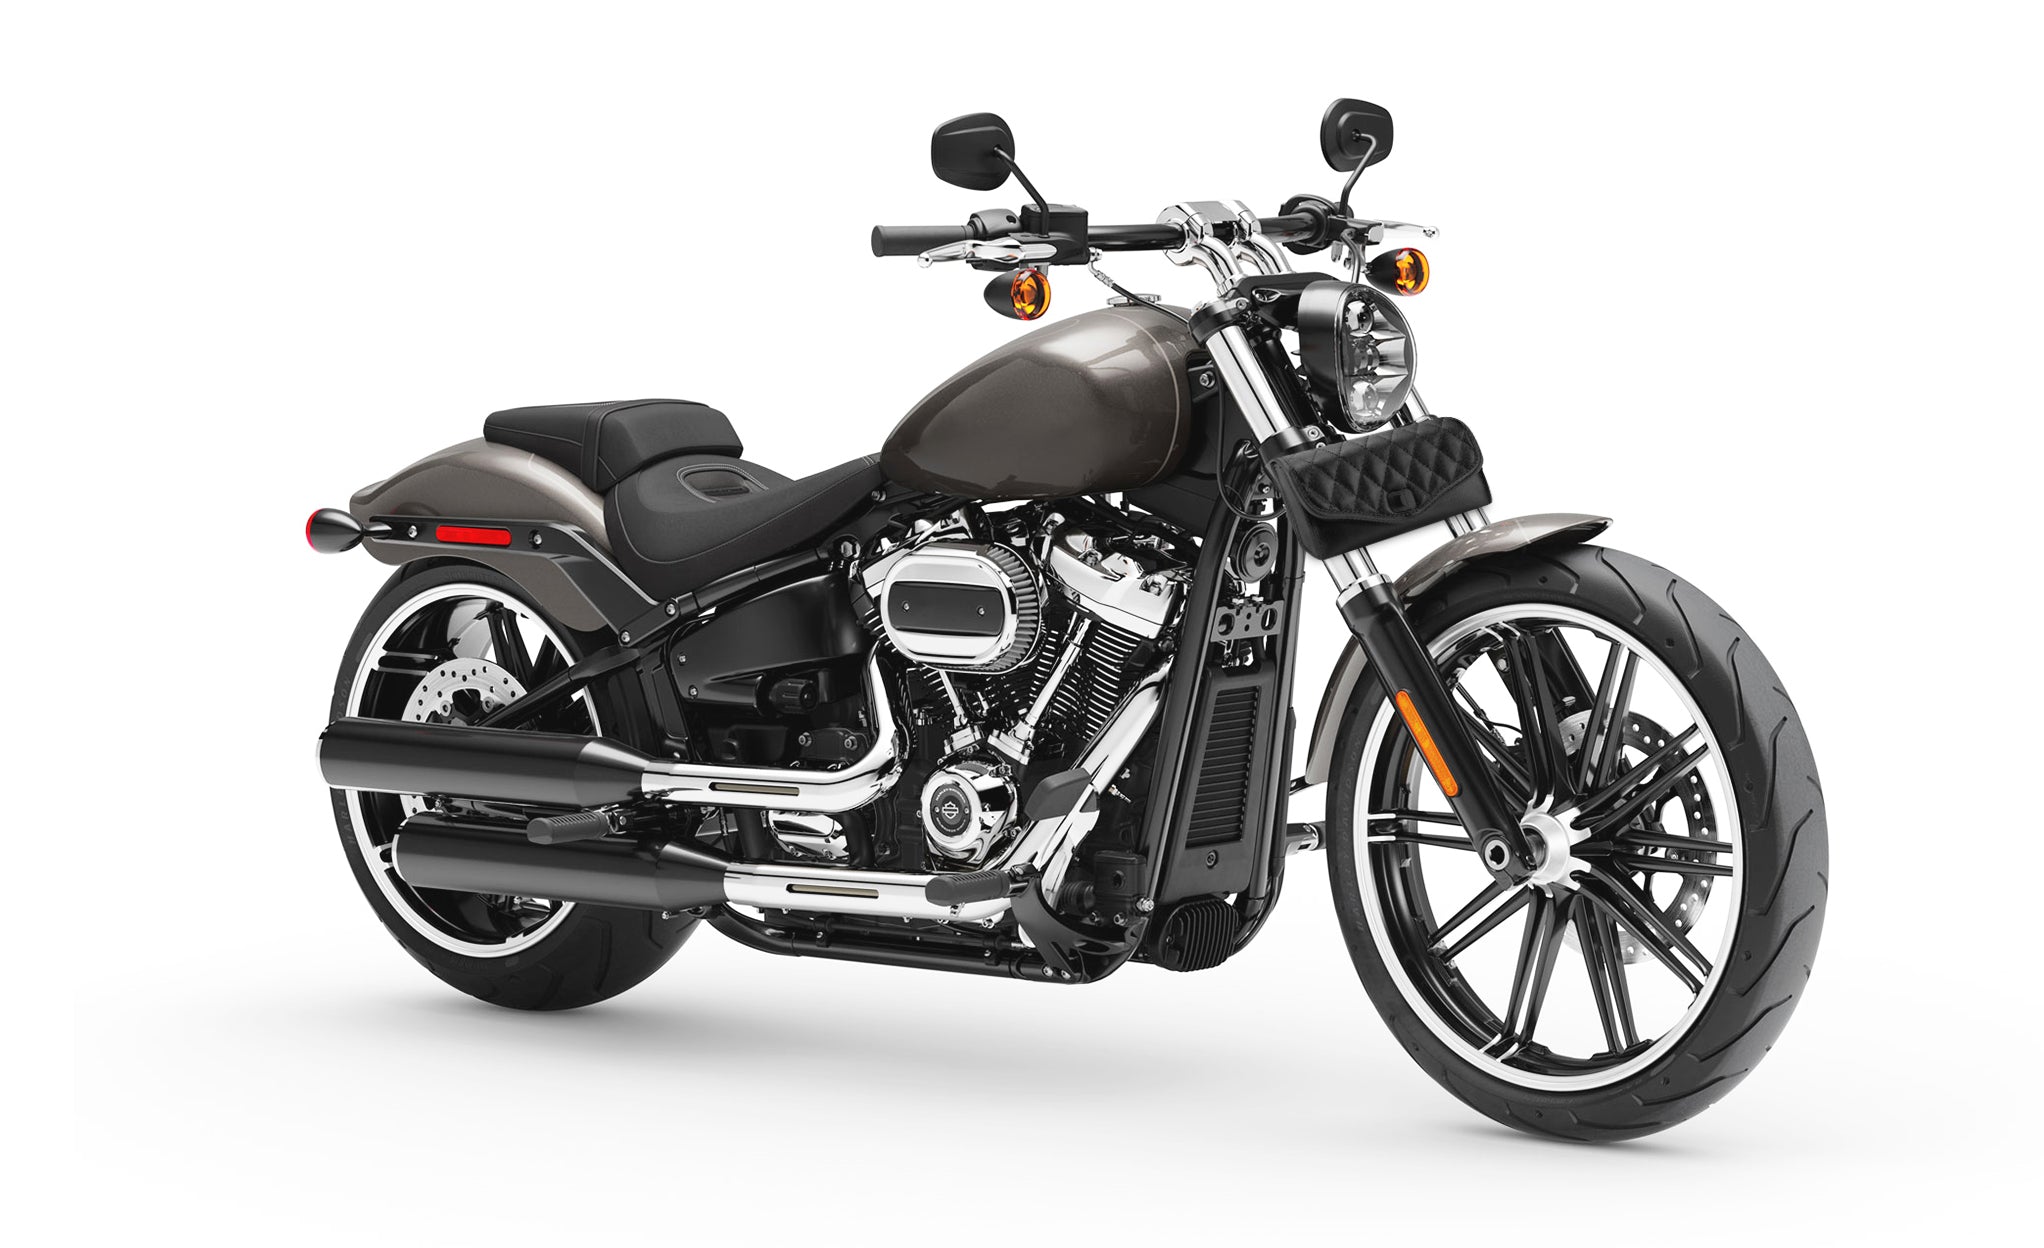 Viking Iron Born Diamond Stitch Leather Motorcycle Tool Bag for Harley Davidson Bag on Bike View @expand